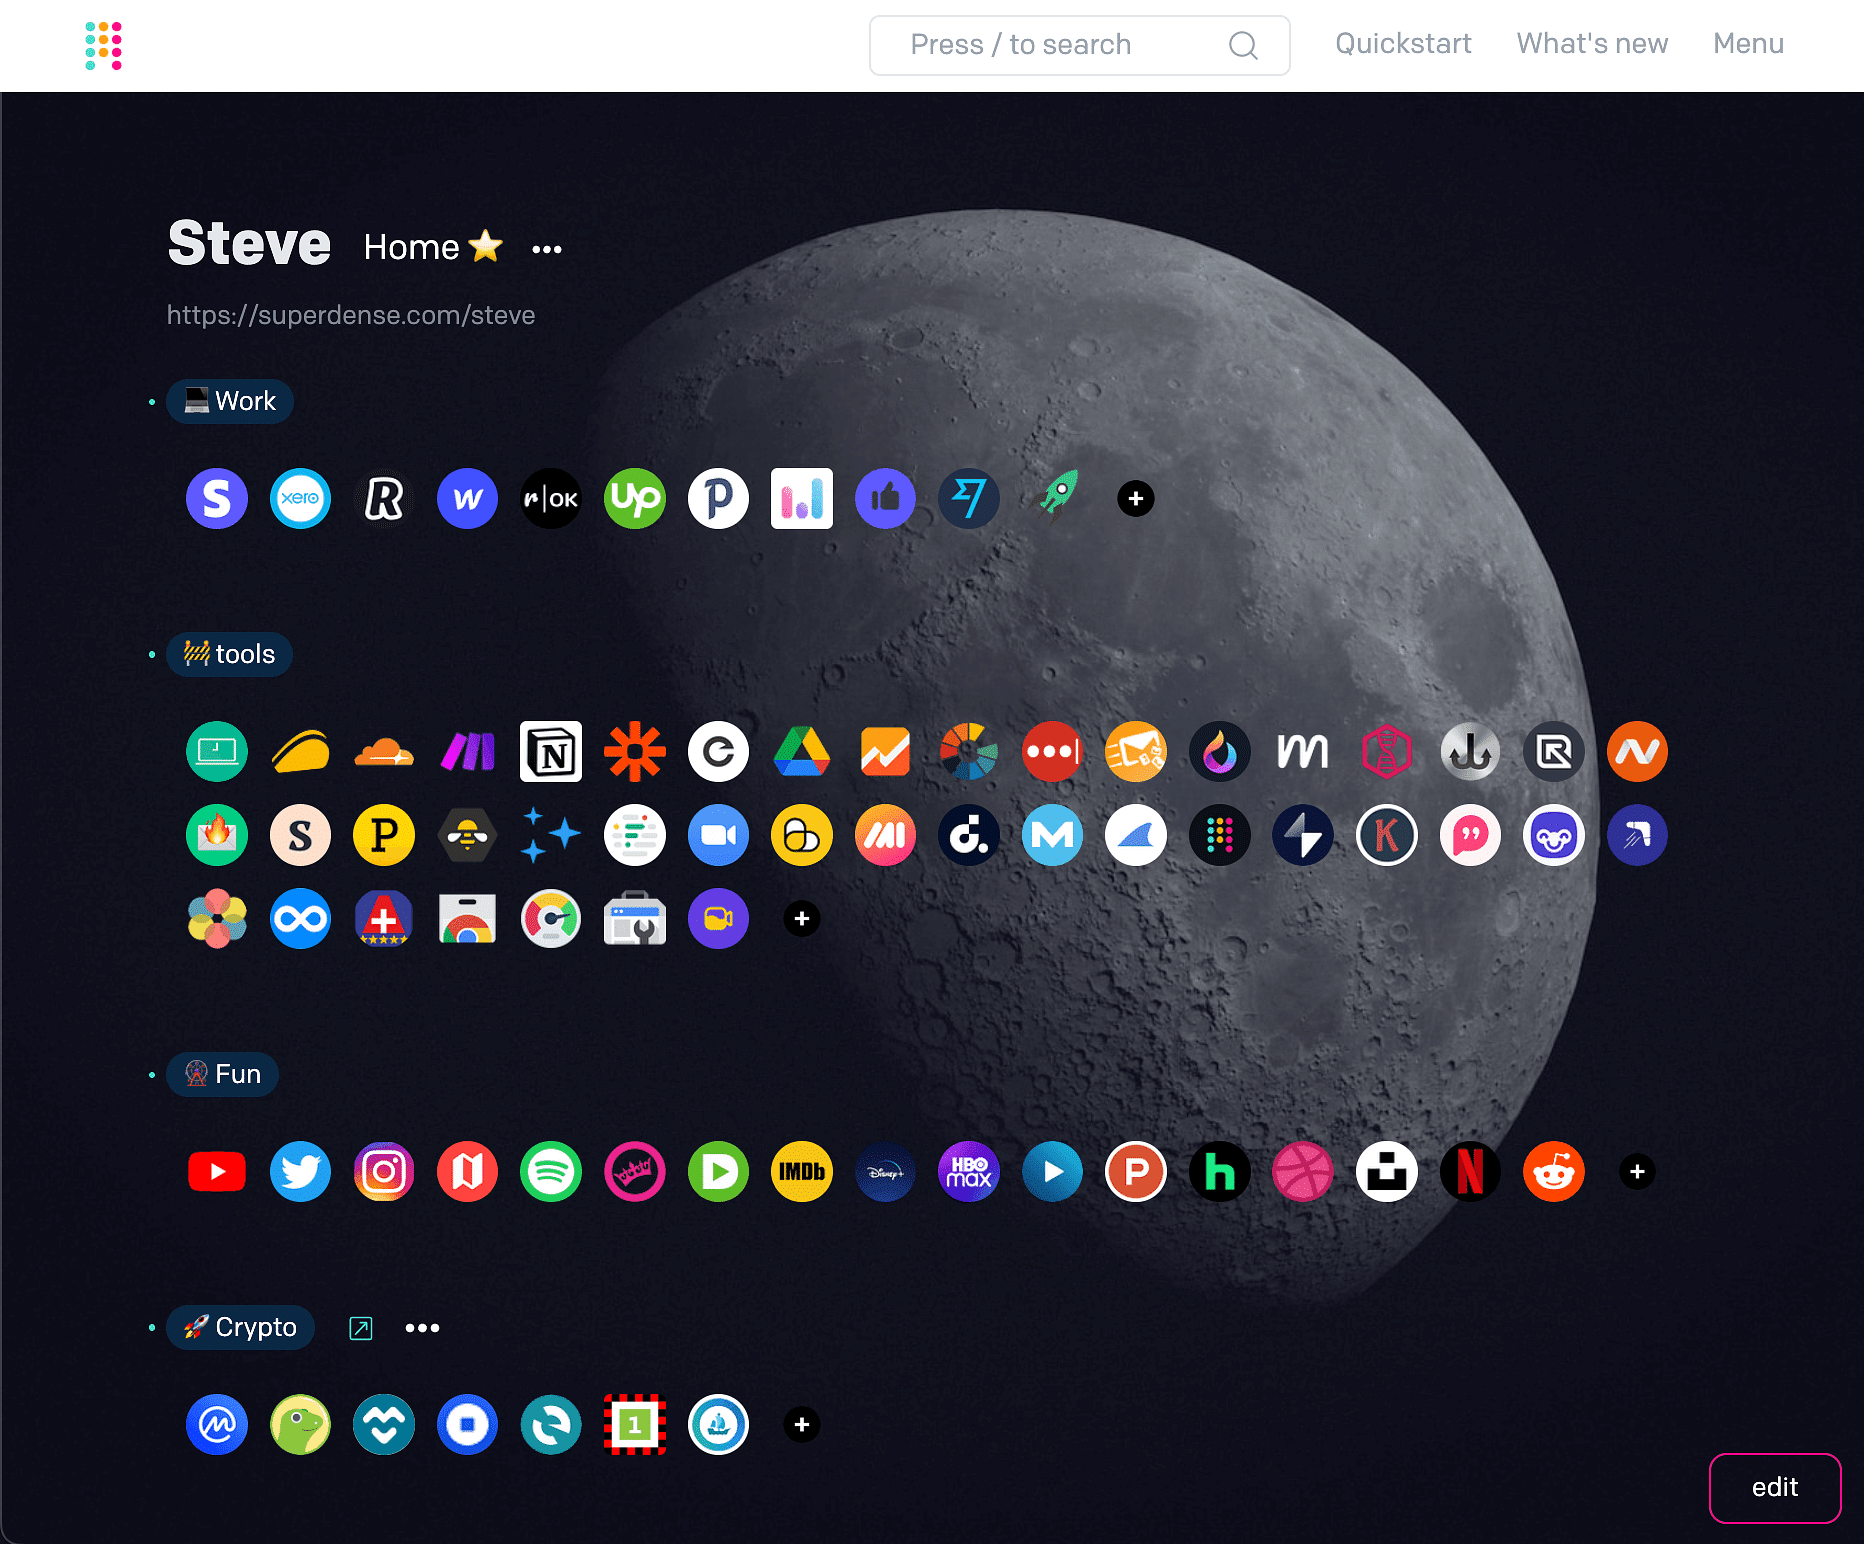 Steve's Superdense page